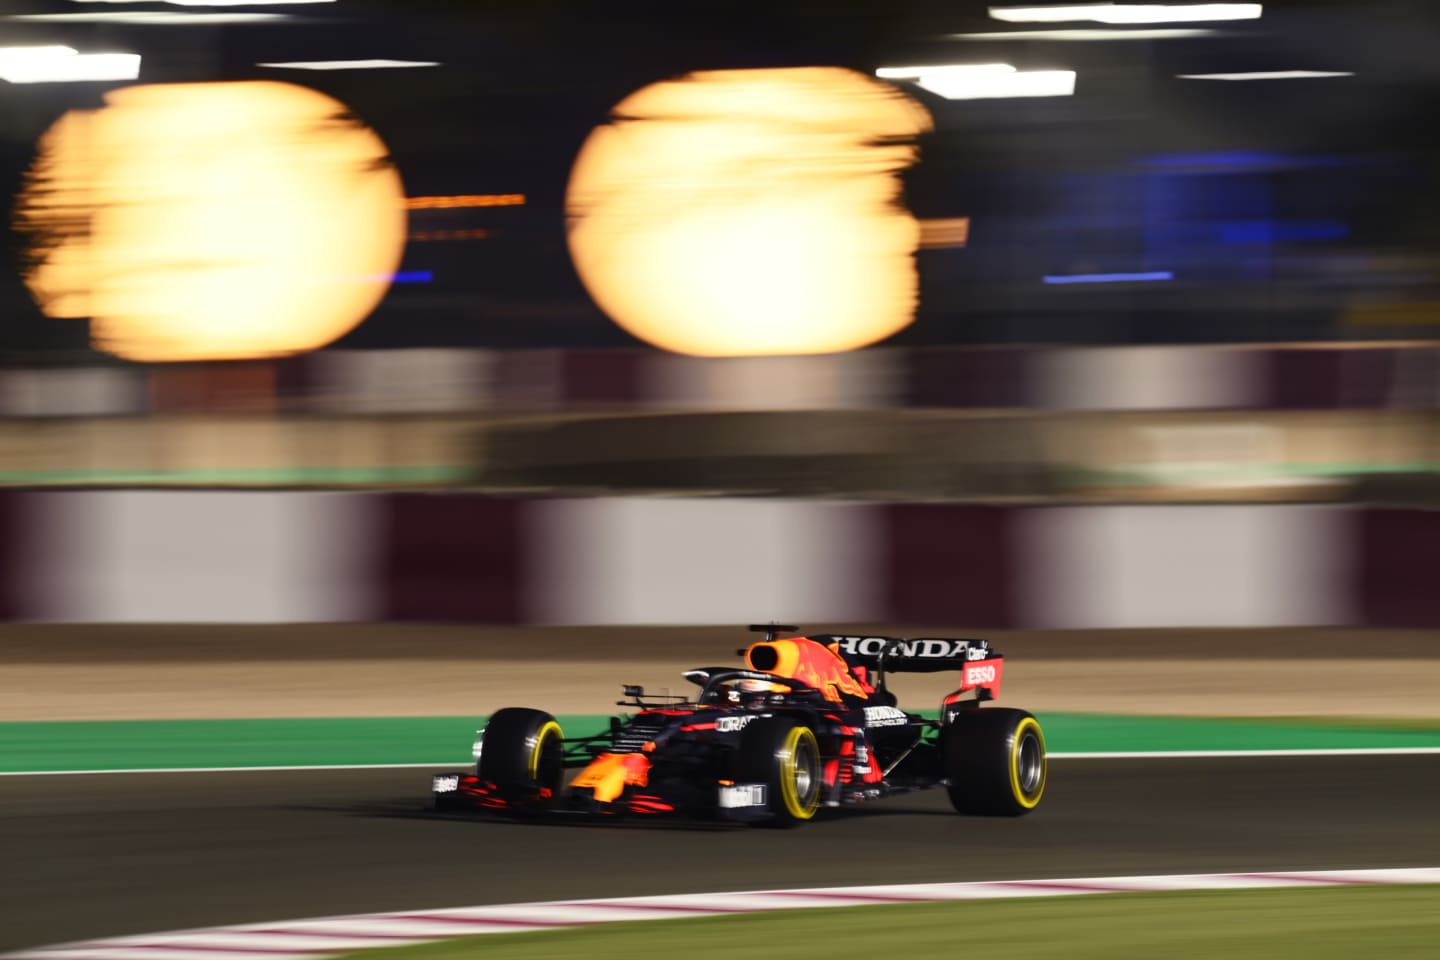 DOHA, QATAR - NOVEMBER 19: Max Verstappen of the Netherlands driving the (33) Red Bull Racing RB16B